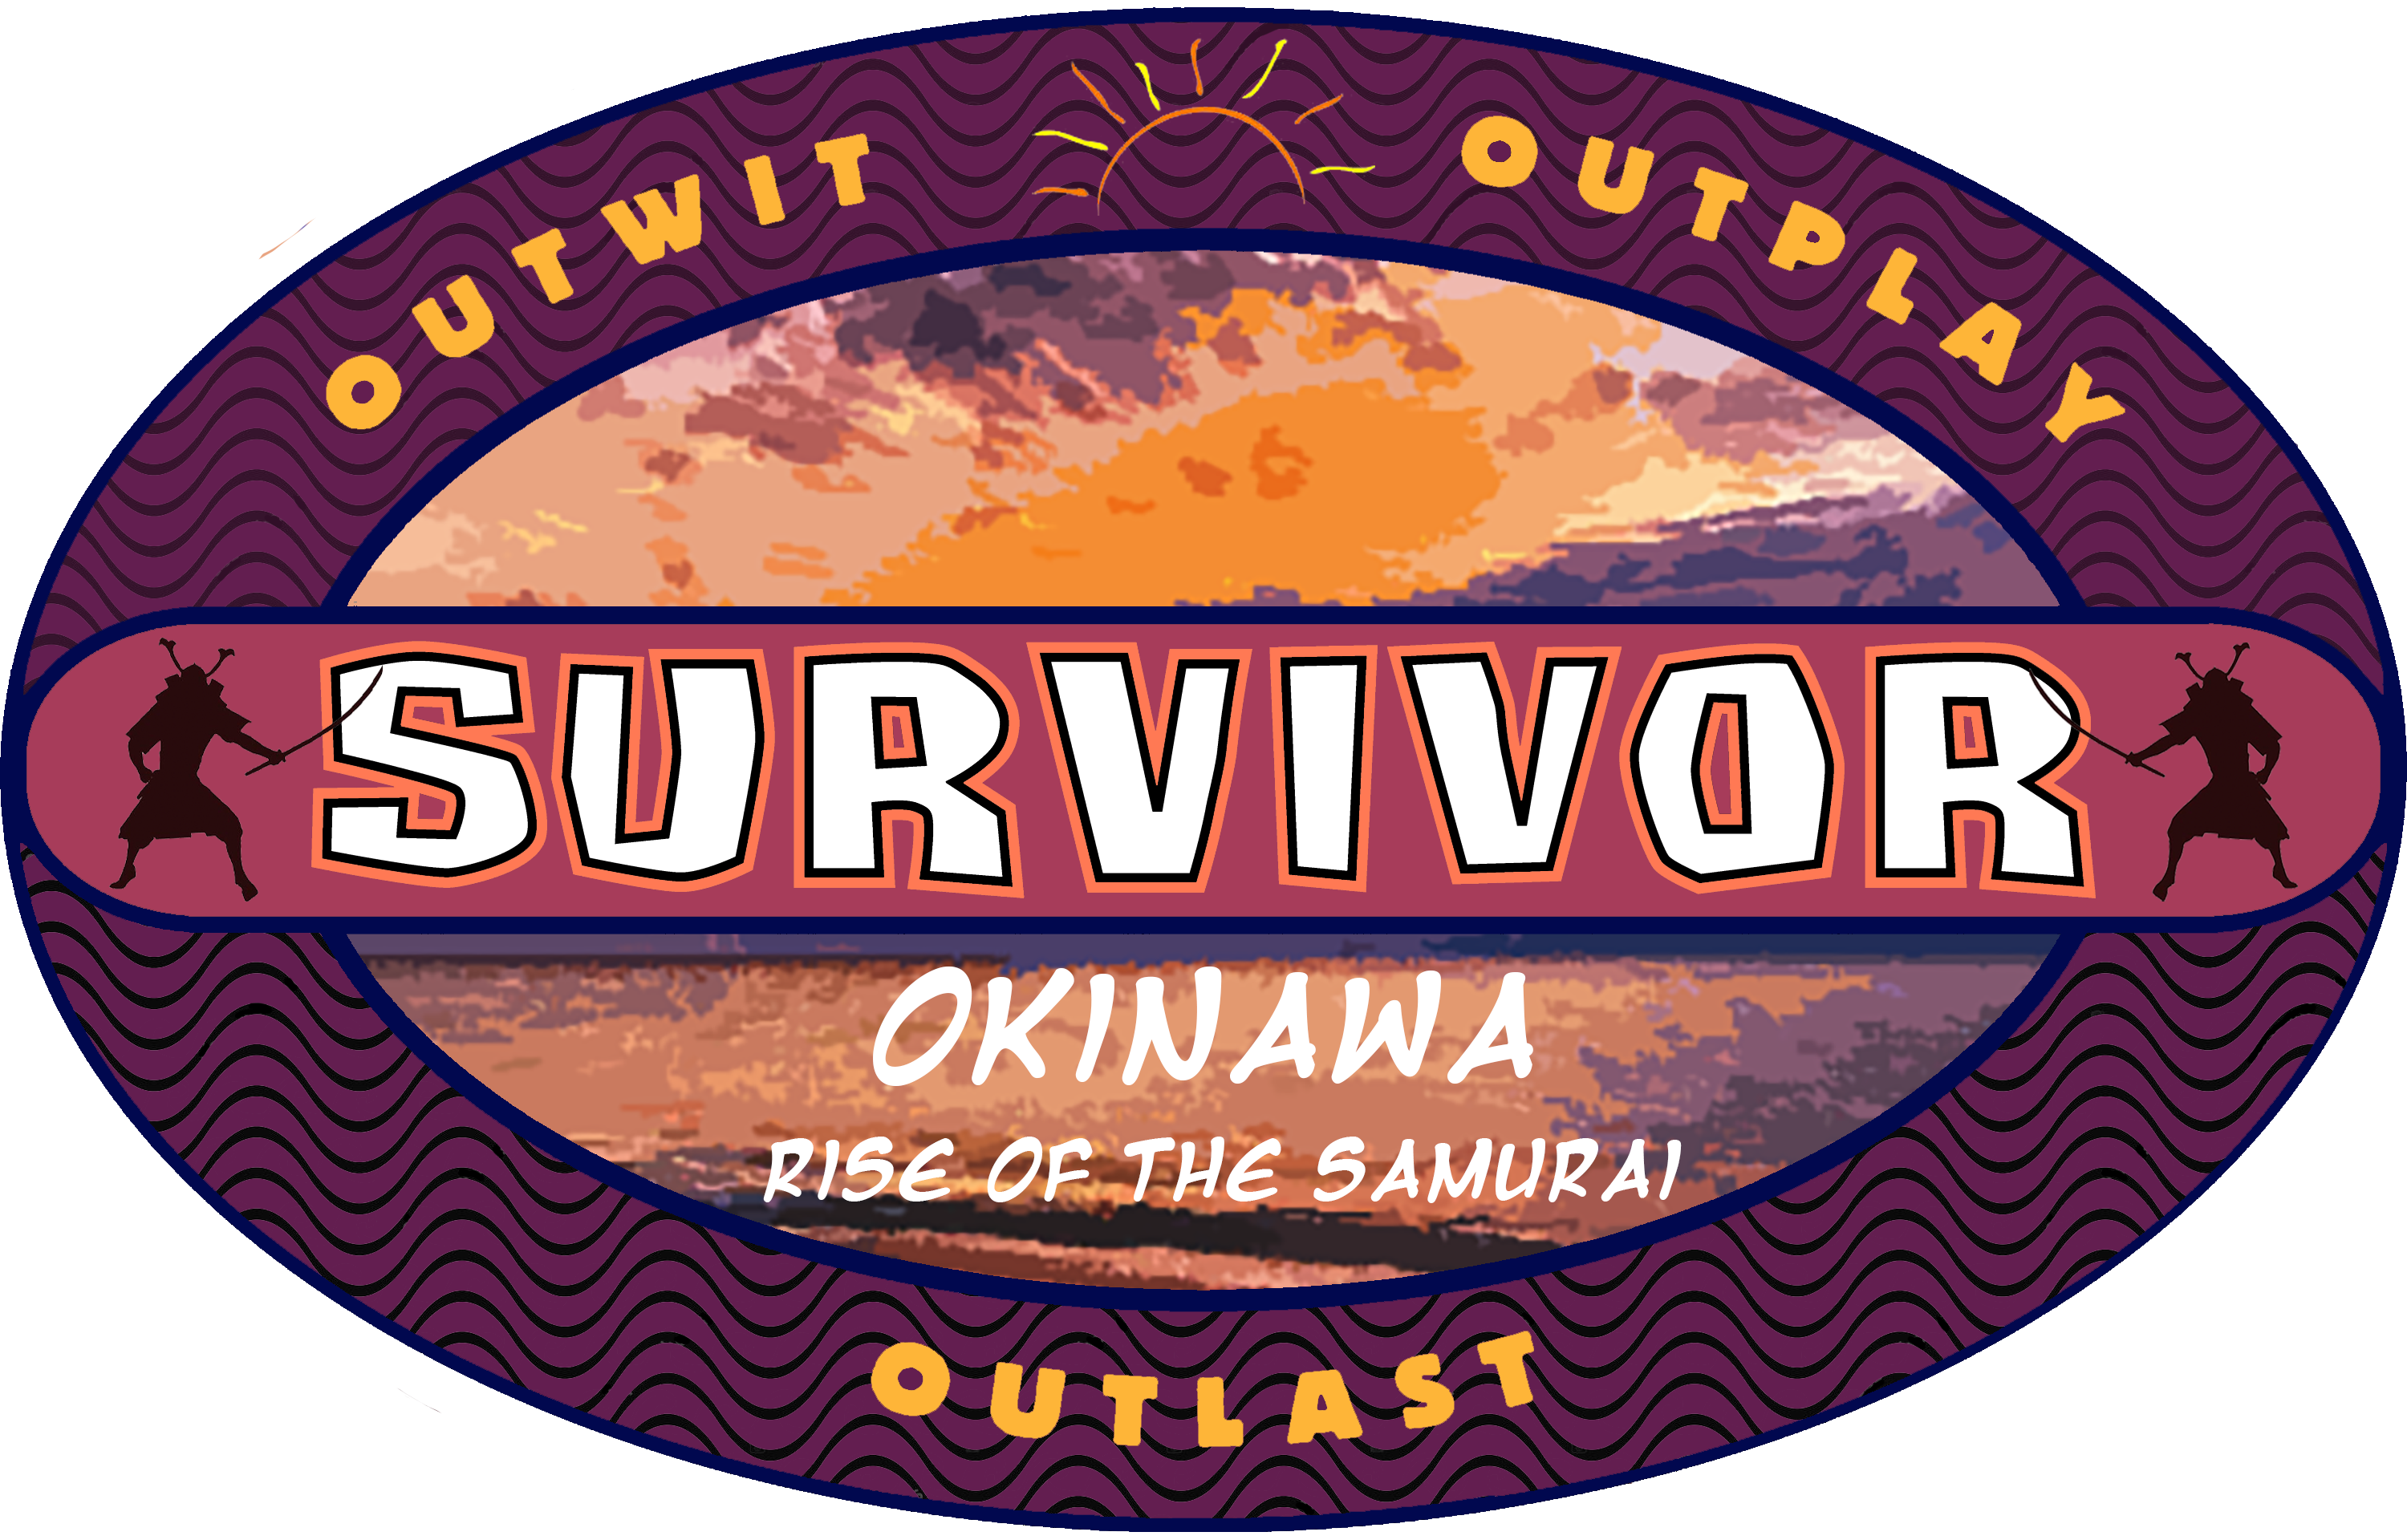 SAMURAI Survivor -Undefeated Blade download the last version for windows